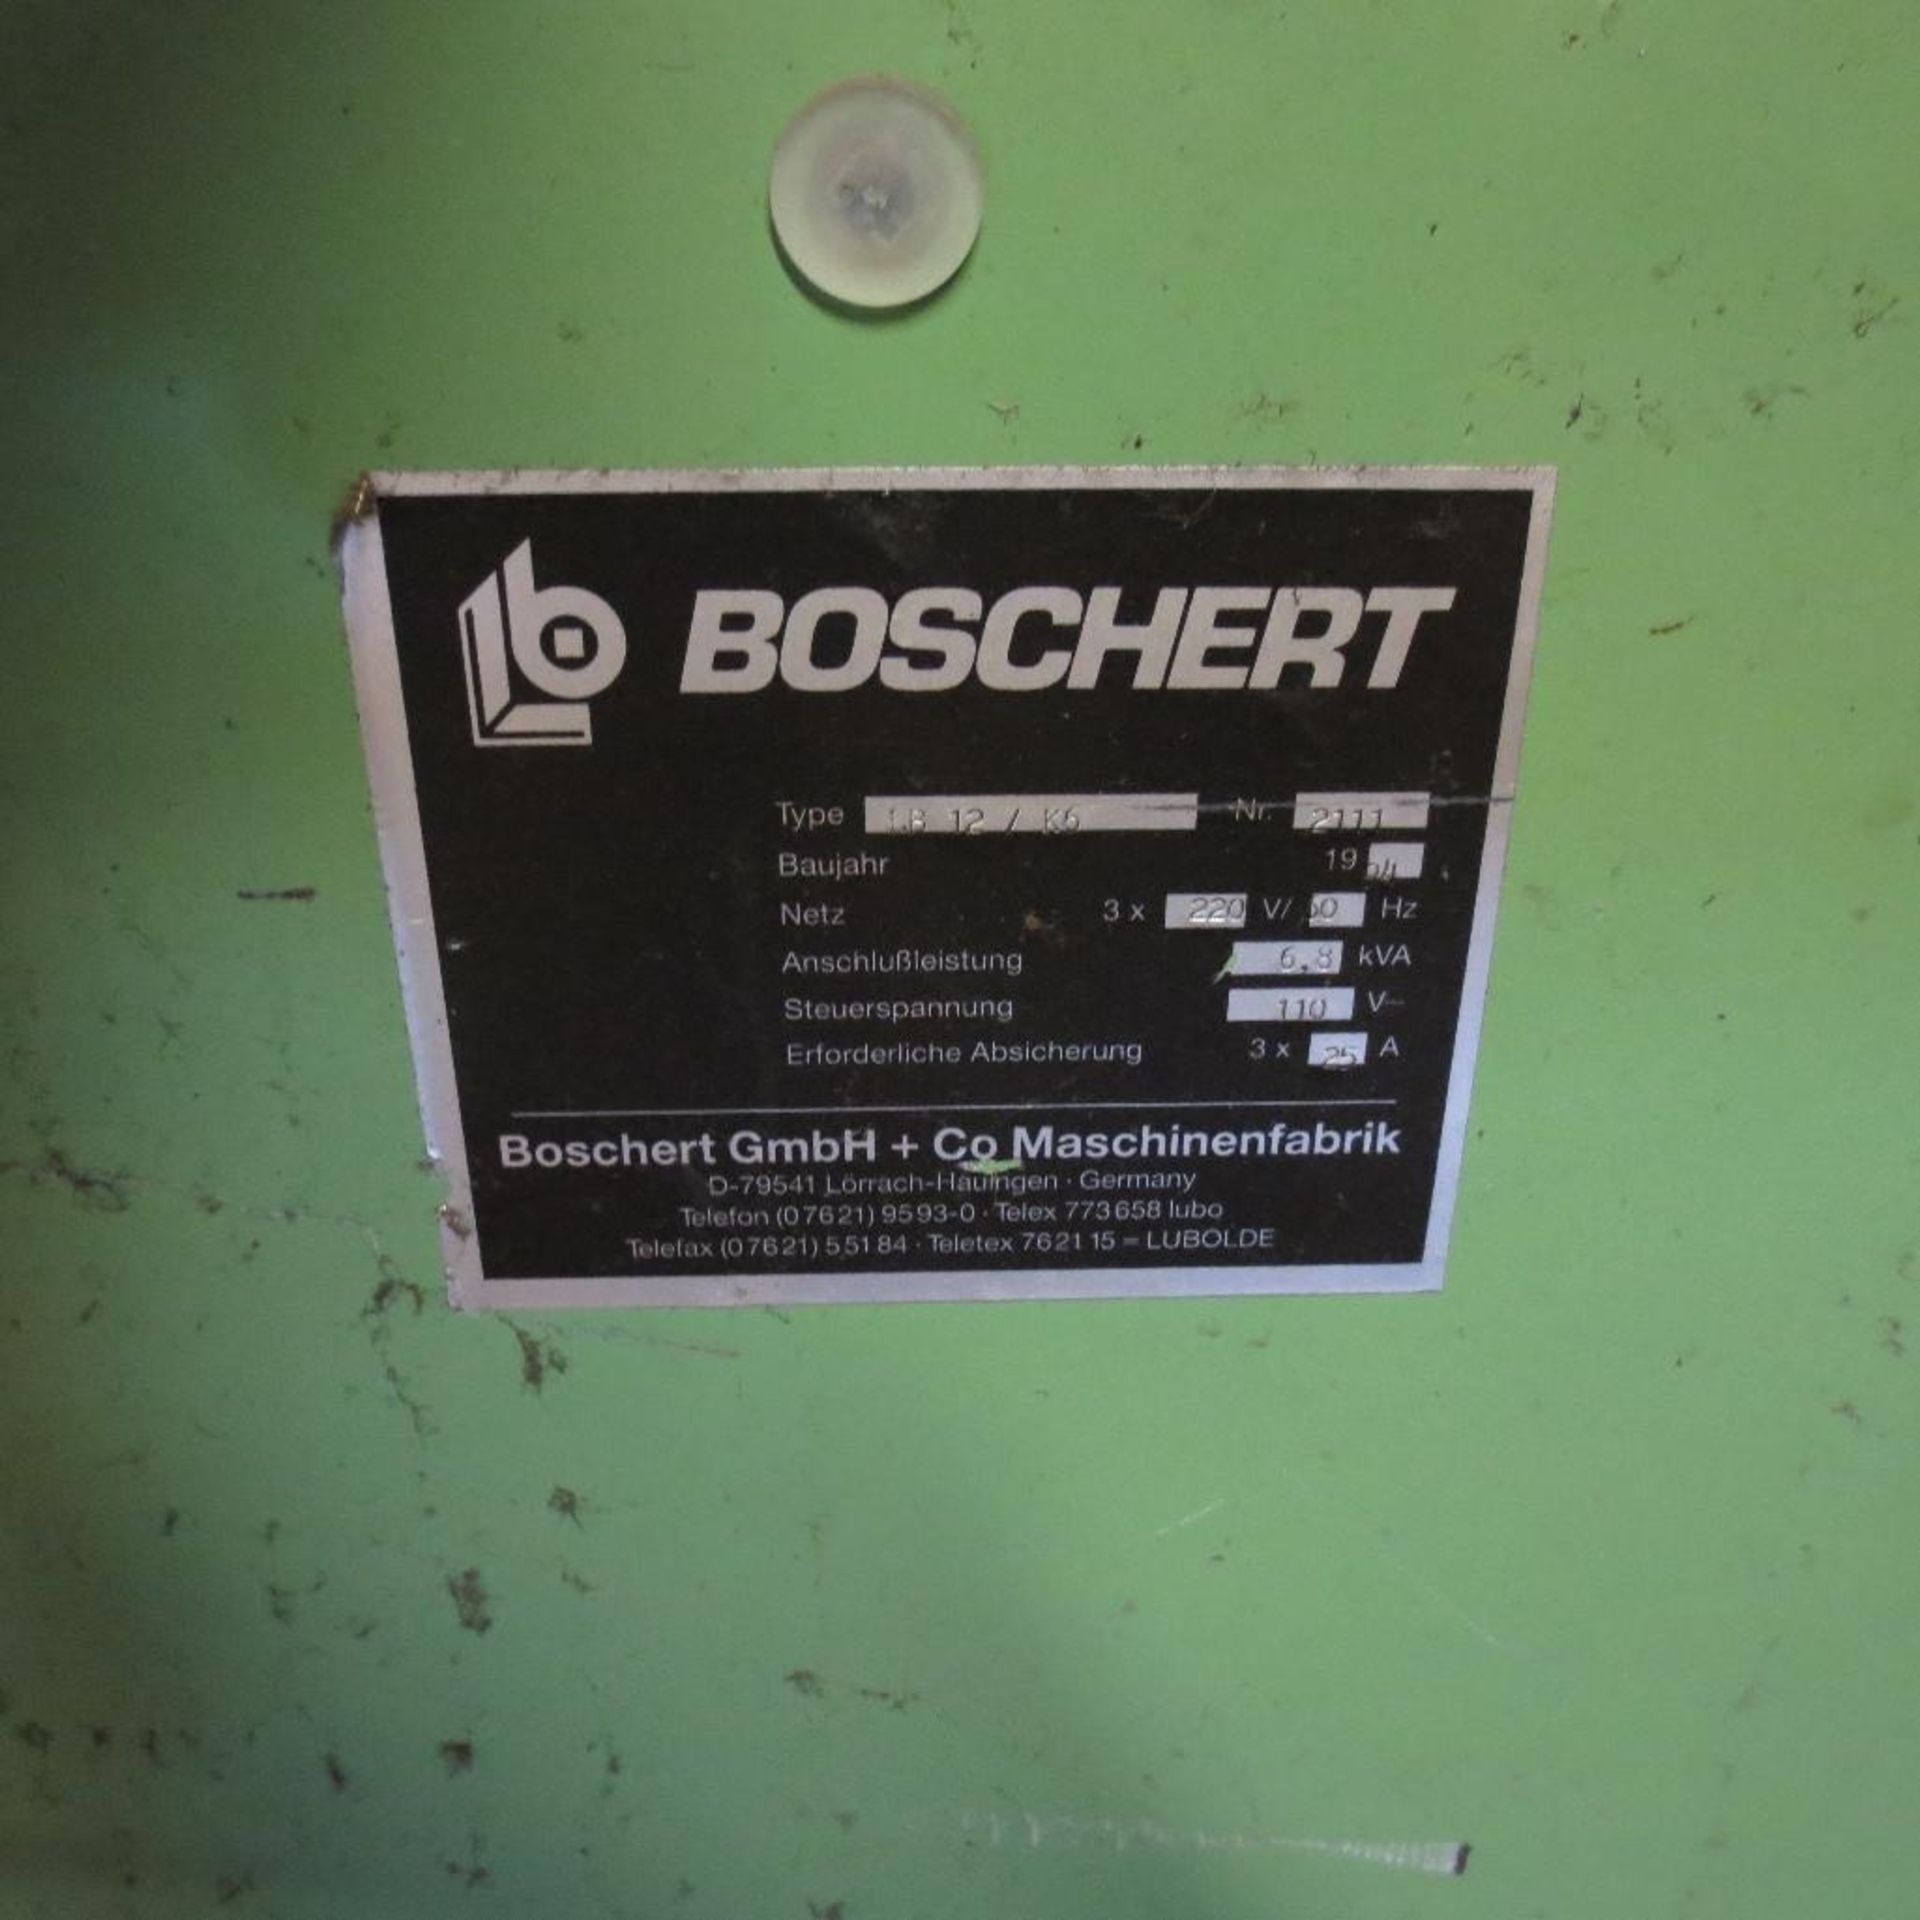 Boschert Model PN4 Power Corner Notching Machine, Integral electricals, S/N 2111 - Image 3 of 4